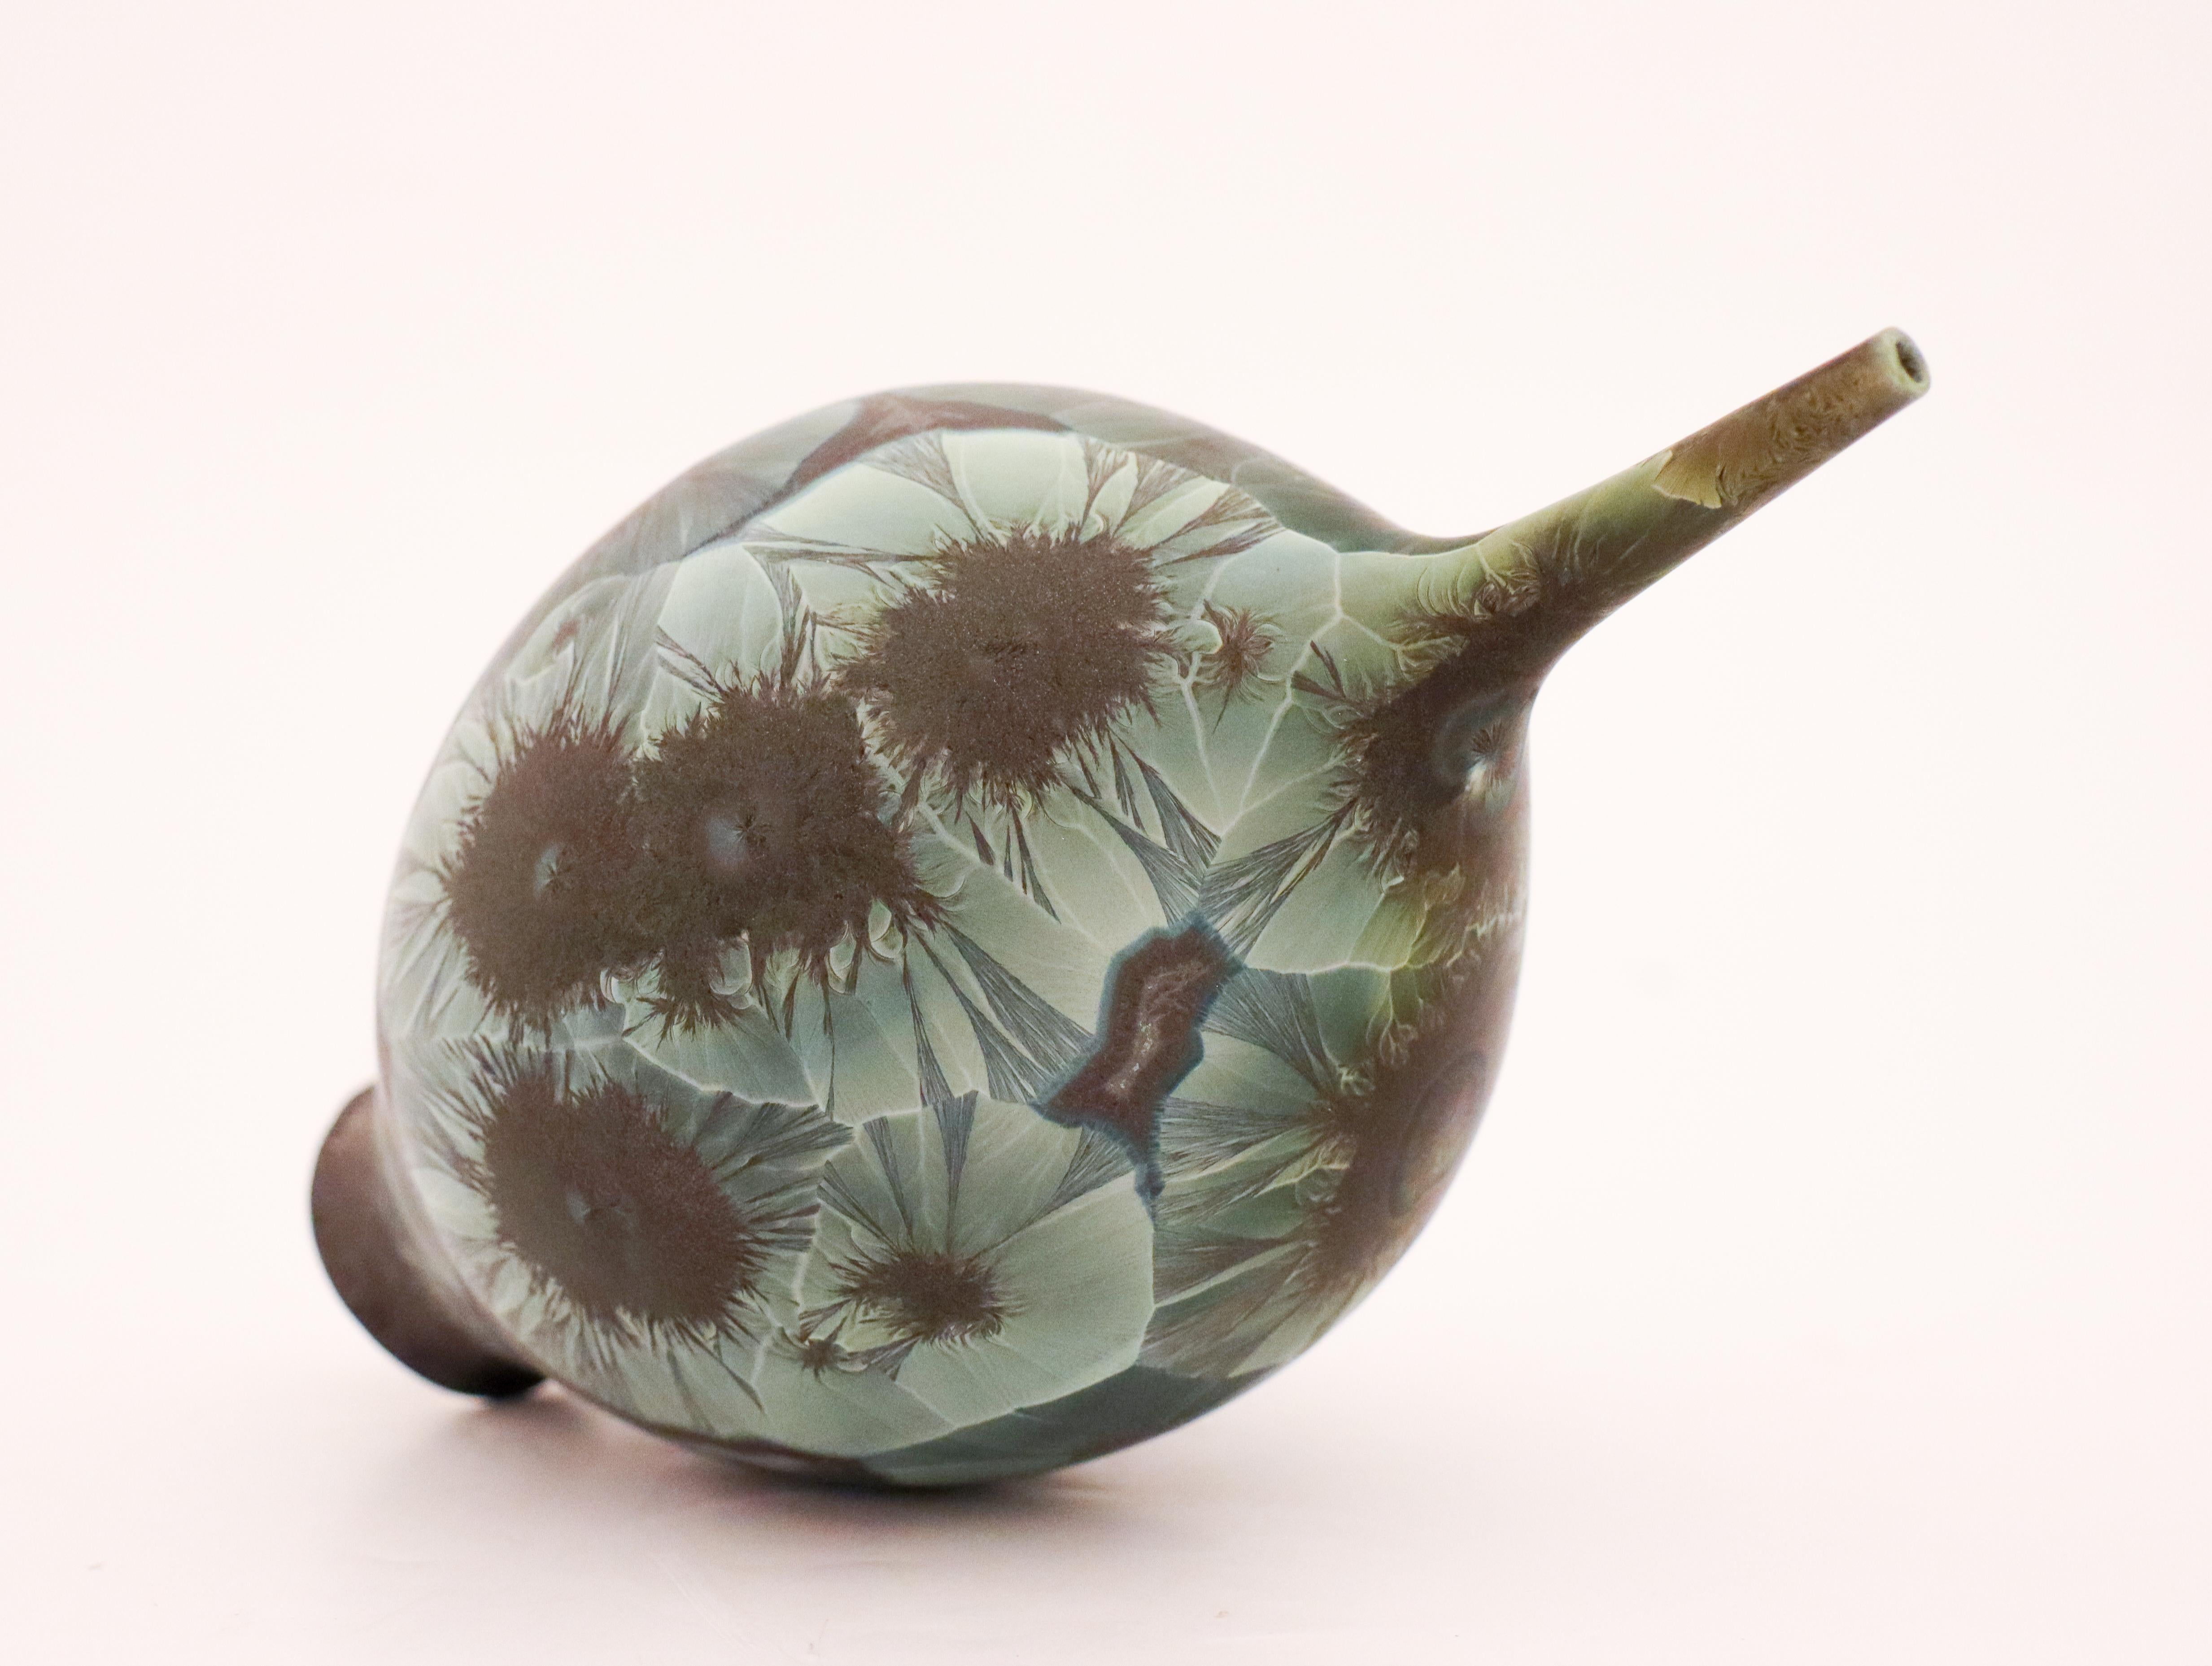 Stoneware Isak Isaksson, Green Crystalline Glaze, Contemporary Swedish Ceramicist